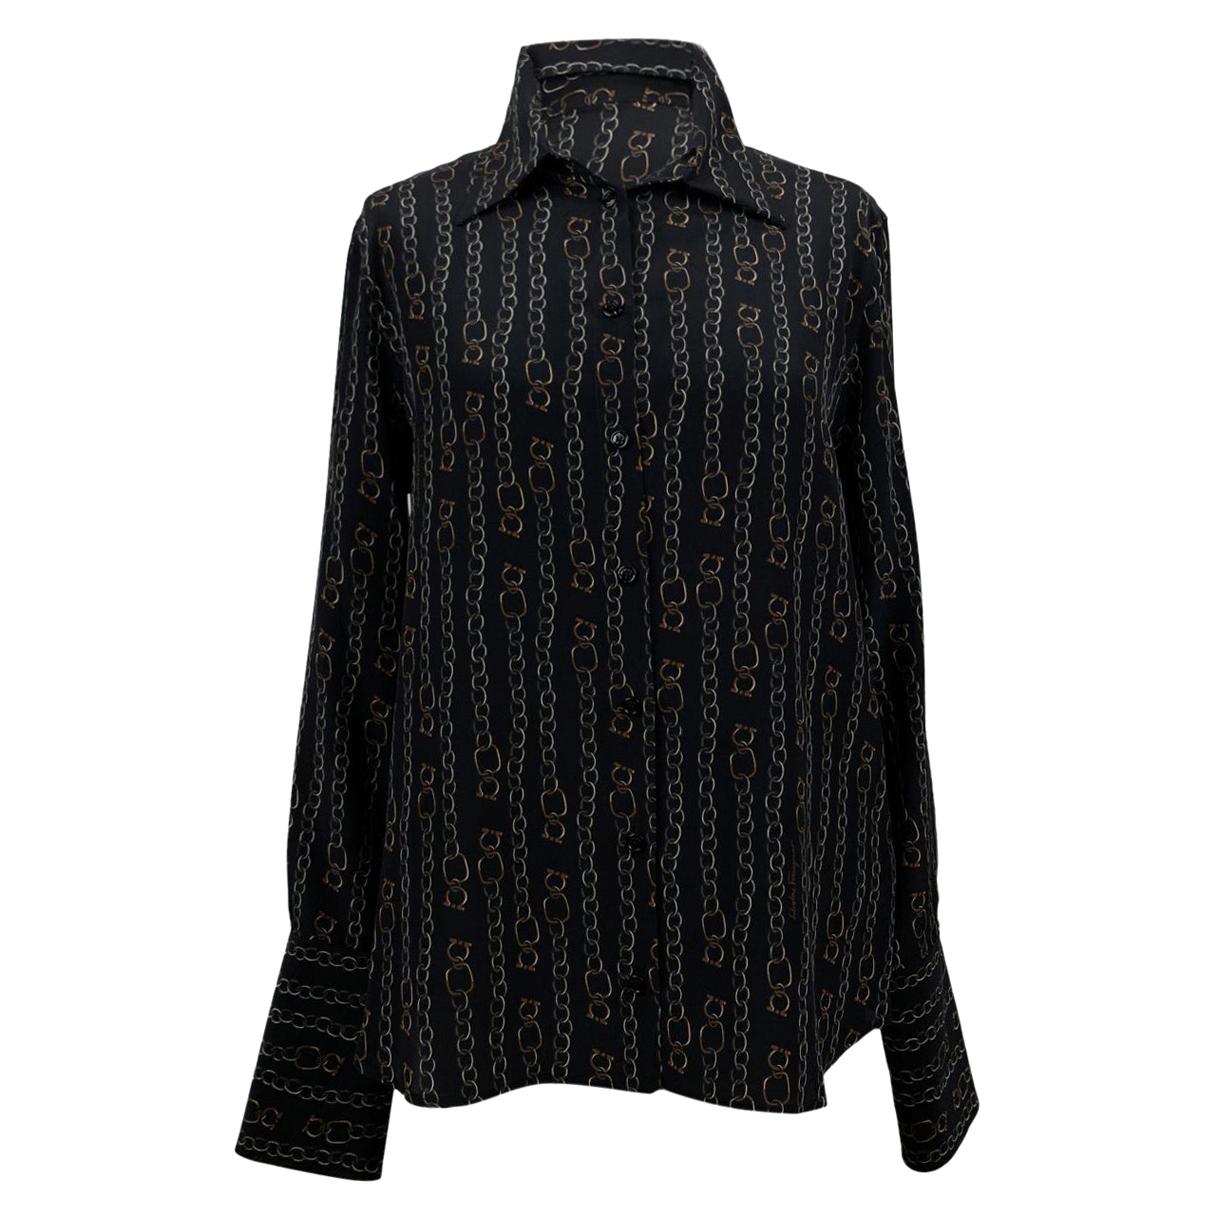 Salvatore Ferragamo Black Silk Catene Print Shirt Size 42 IT